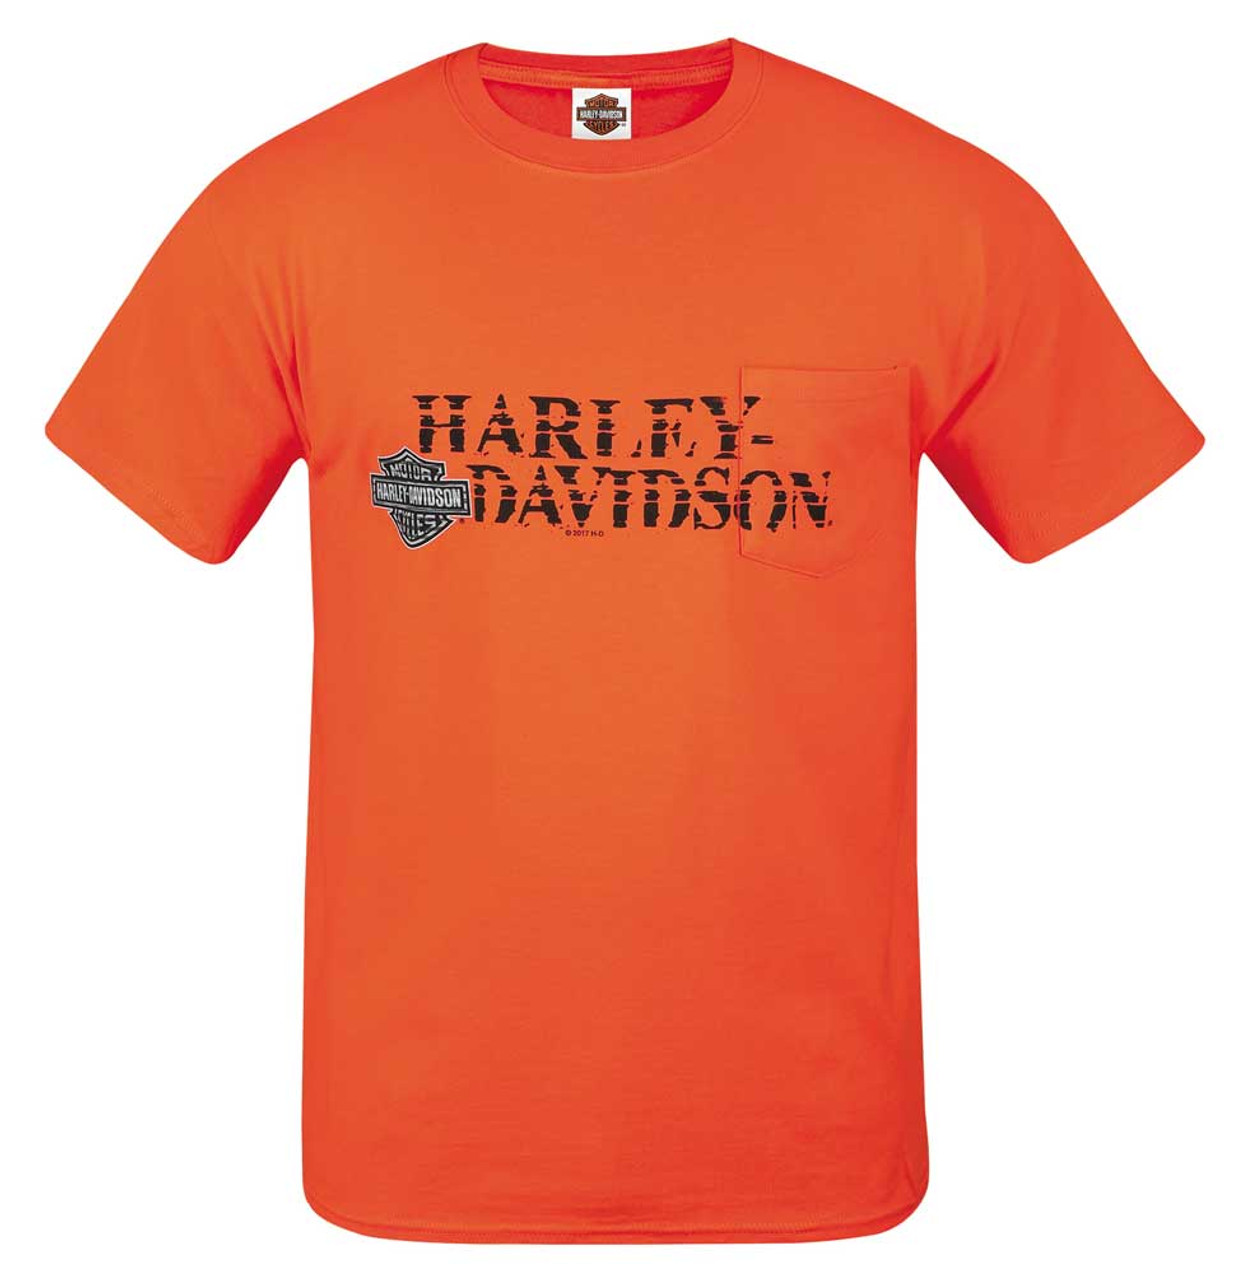 Harley Davidson® Mens Off Center Short Sleeve Chest Pocket T Shirt Bright Orange Wisconsin 